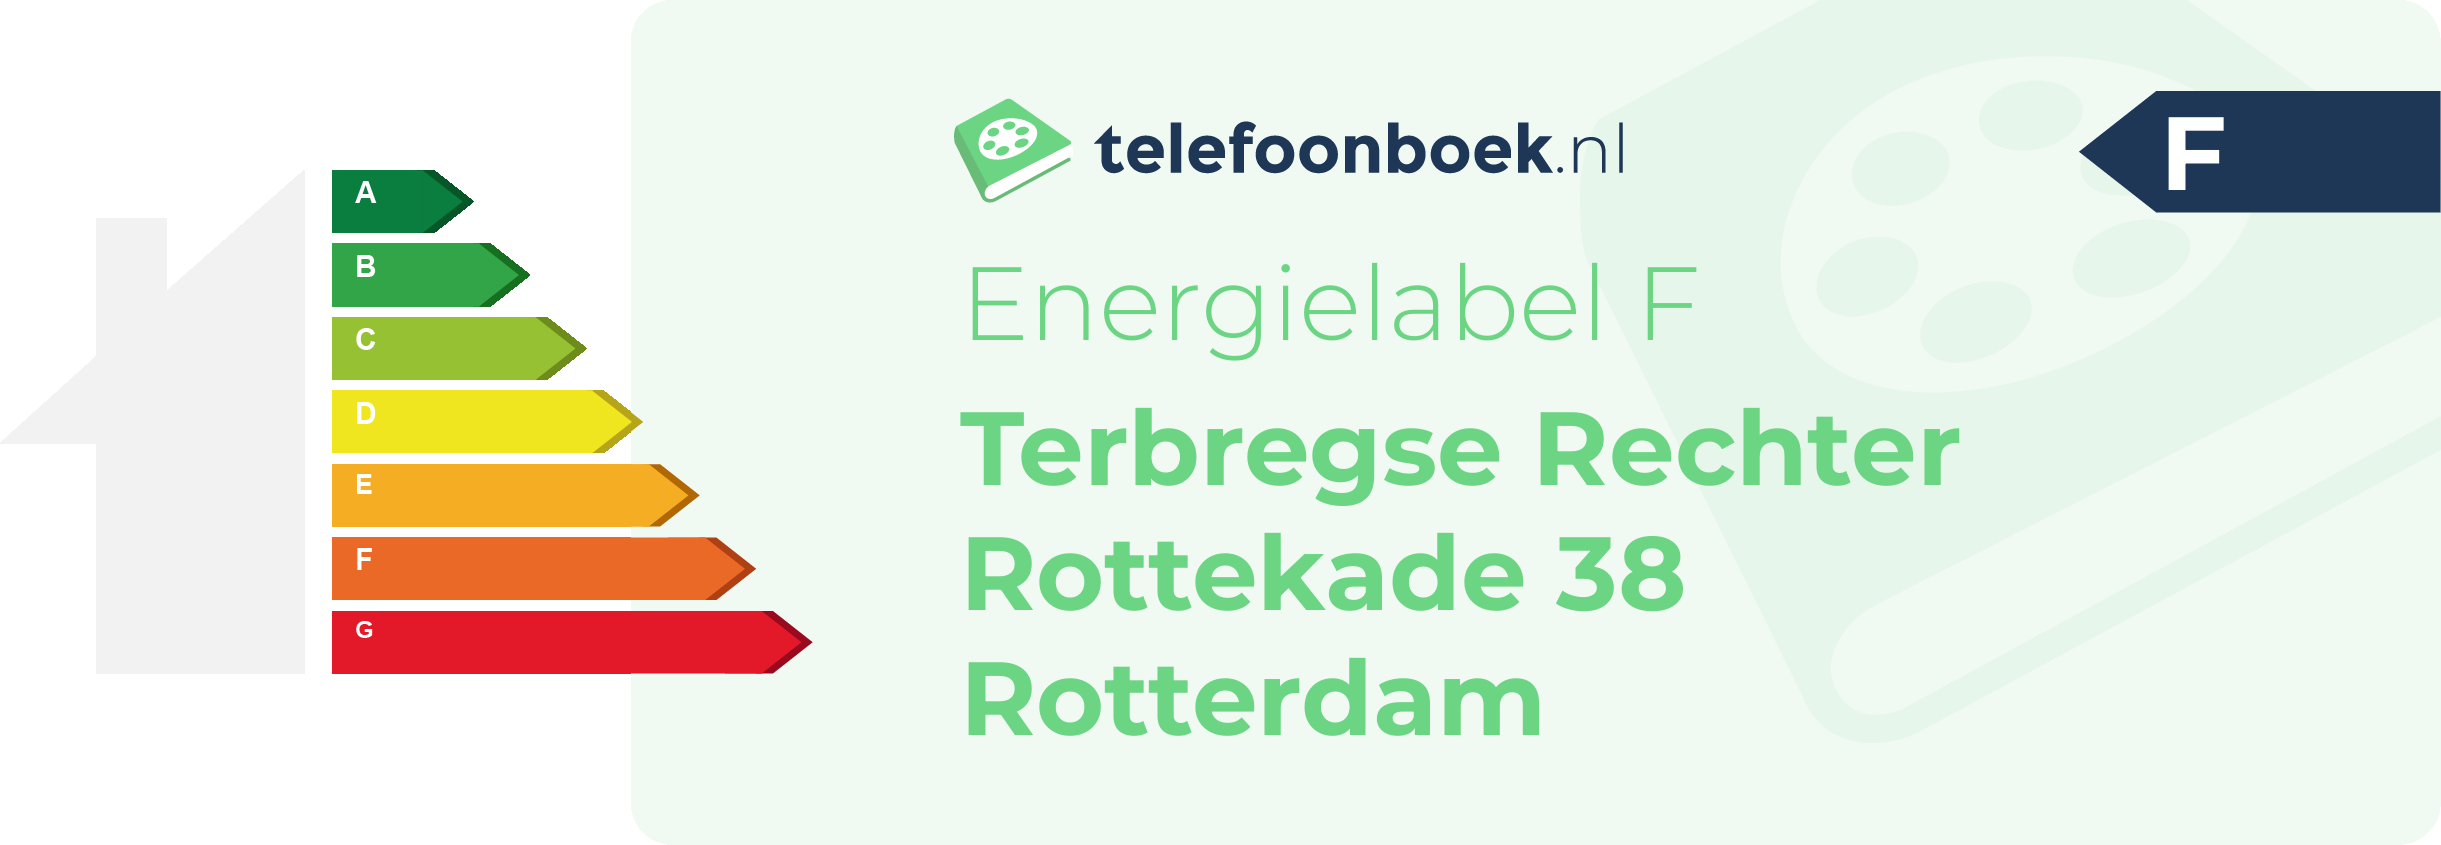 Energielabel Terbregse Rechter Rottekade 38 Rotterdam